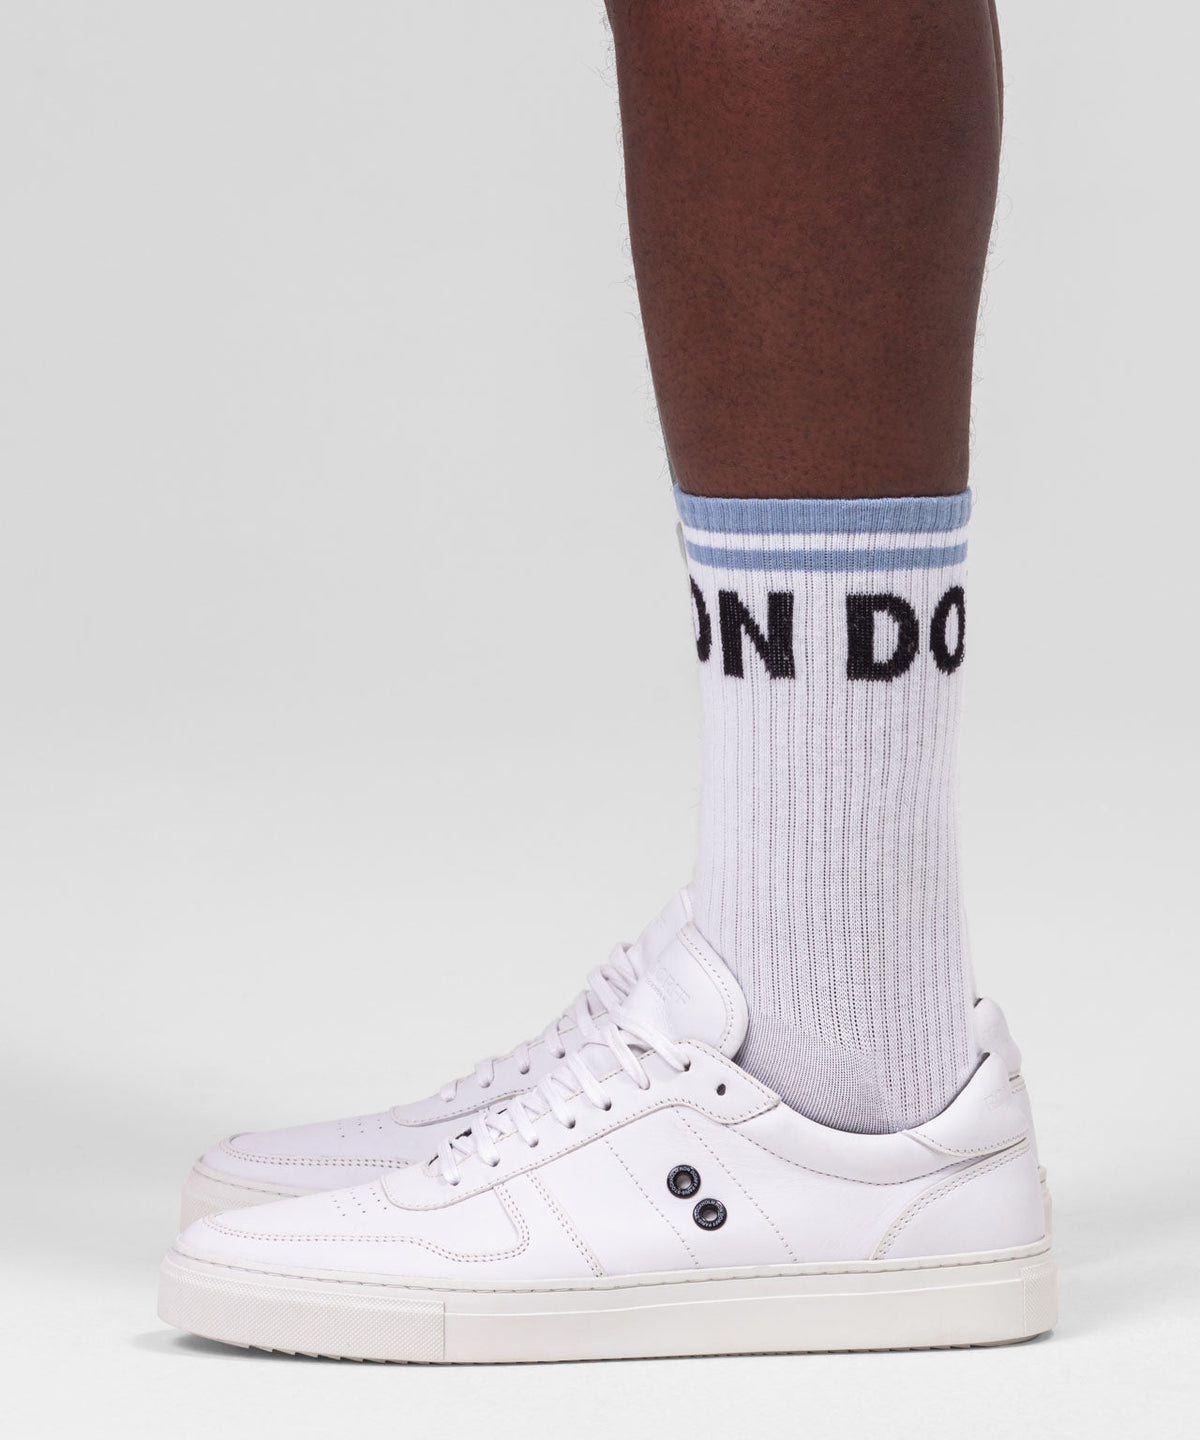 Sports Socks RON DORFF: White / Dusty Blue